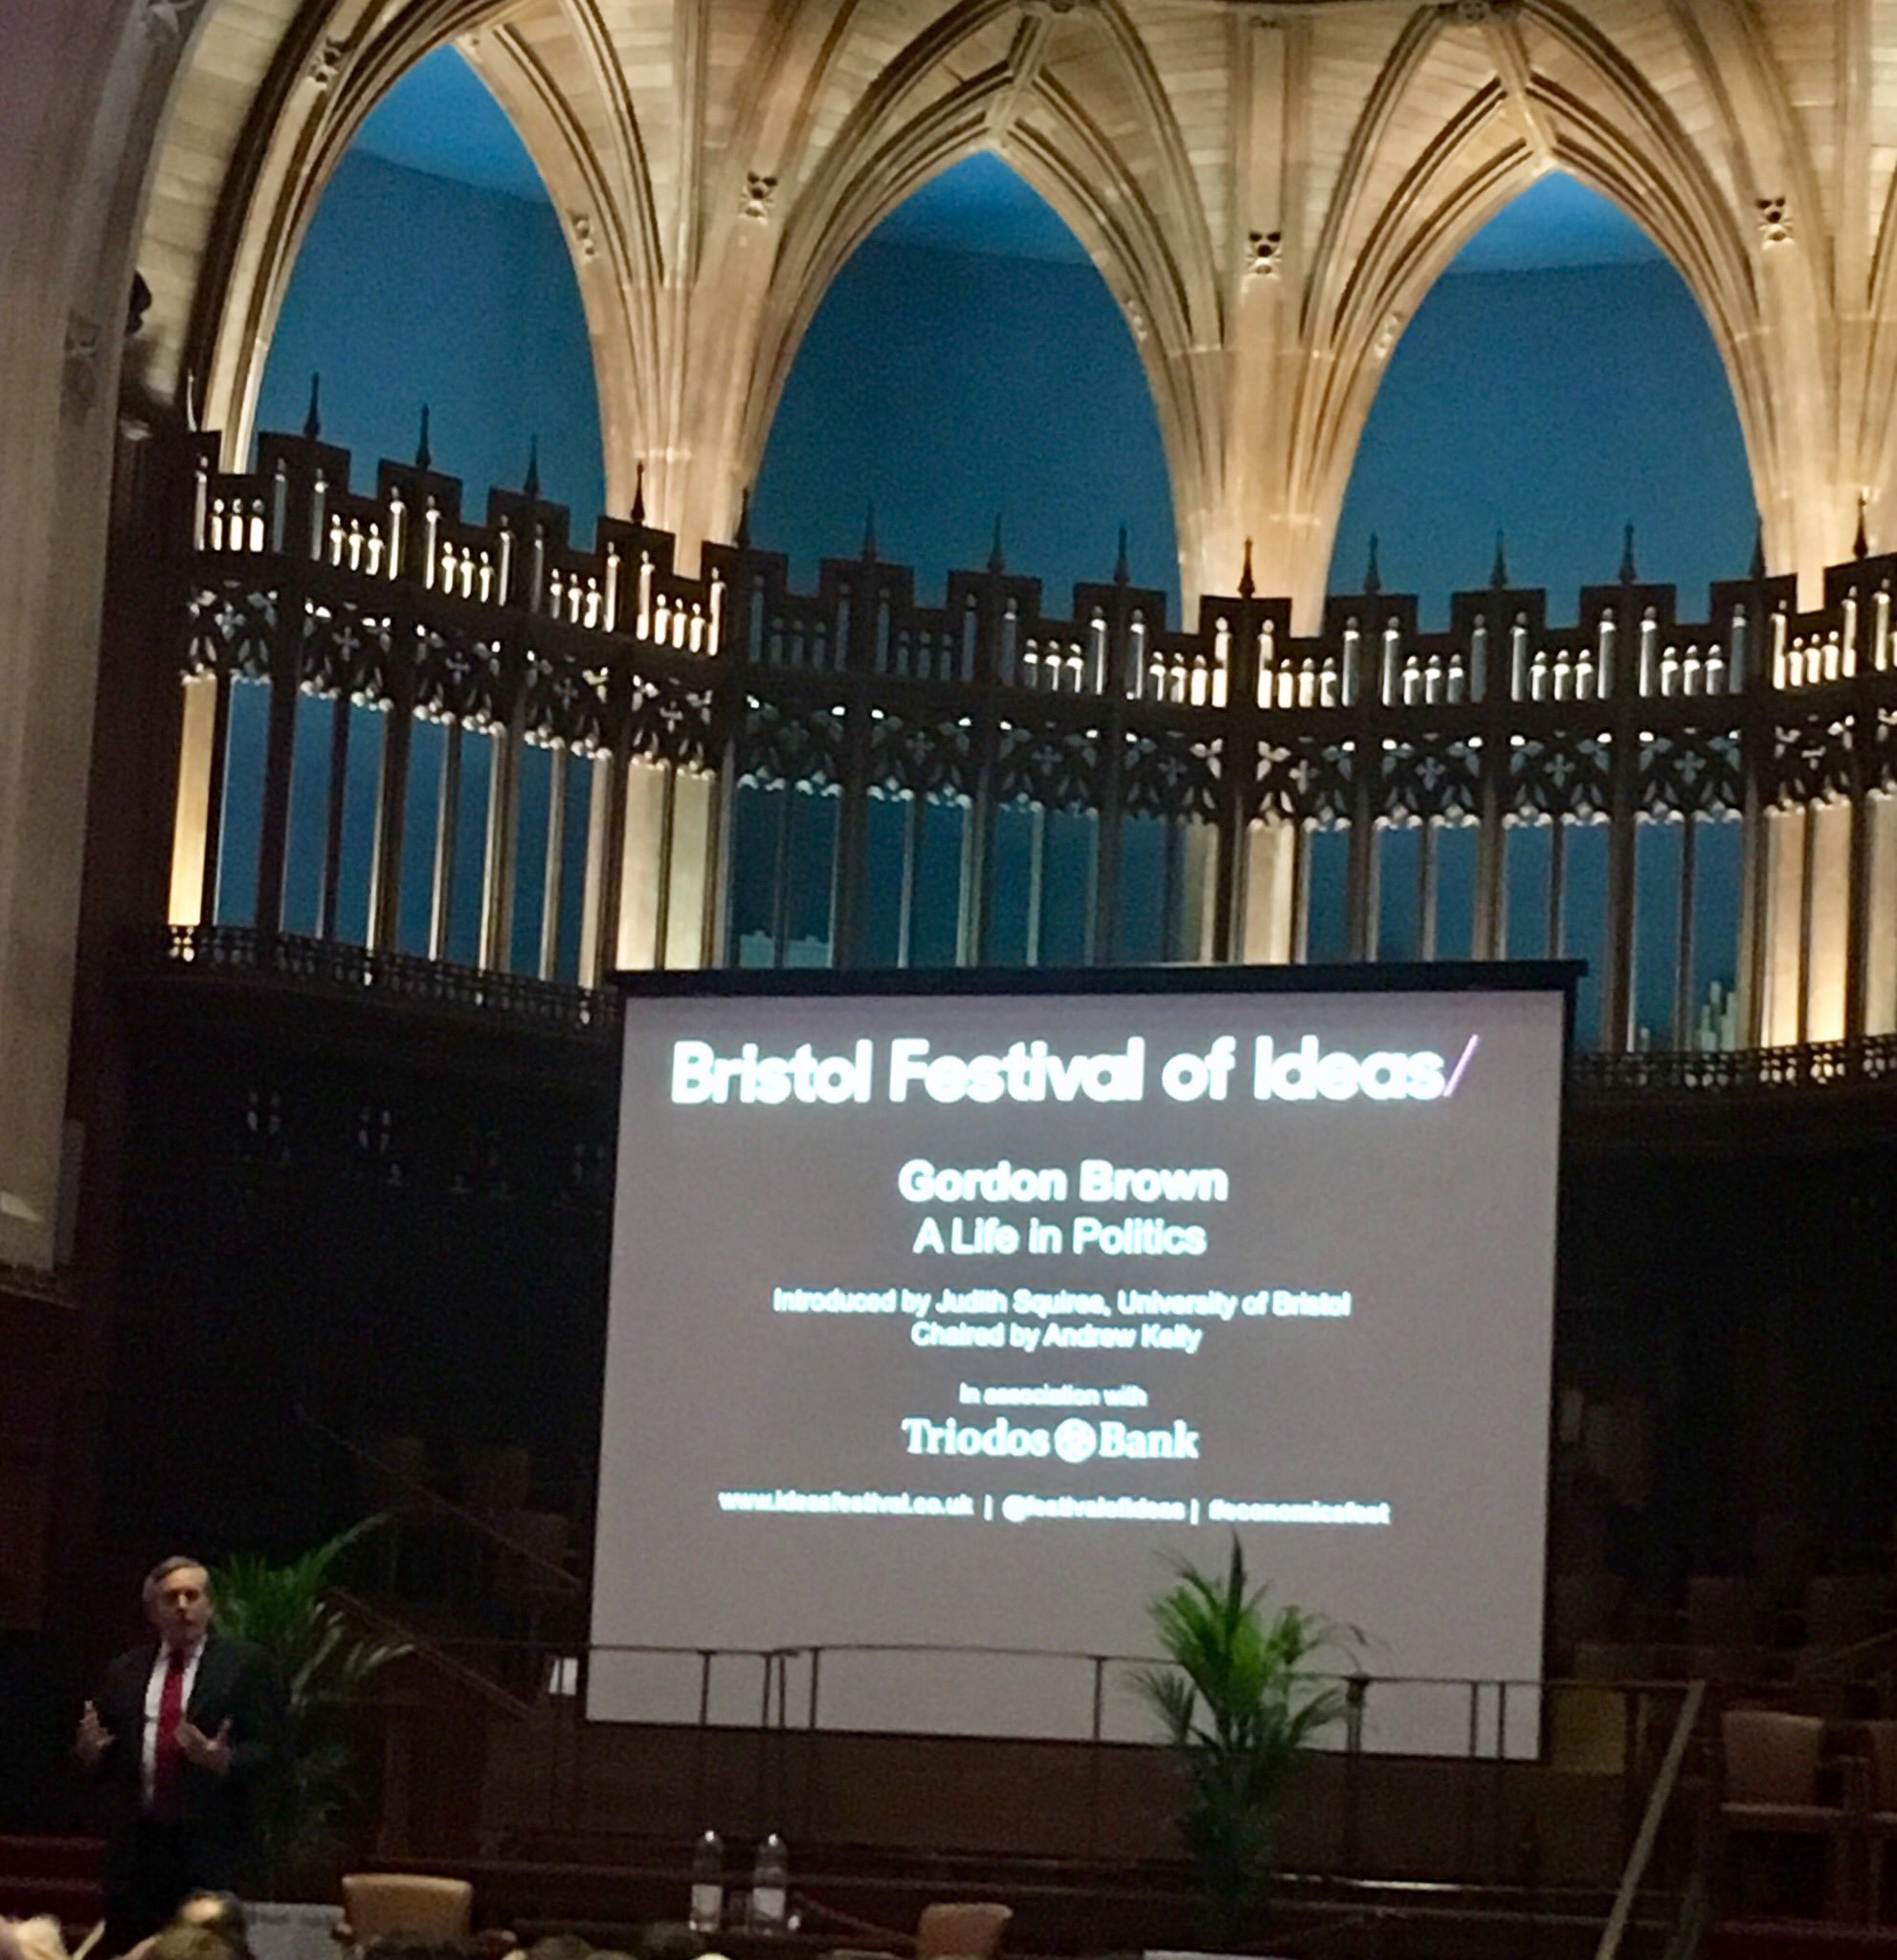 Pleasure to hear Gordon Brown @OfficeGSBrown speak at @FestivalofIdeas Bristol #economicsfest https://t.co/mzNaEMAzxf